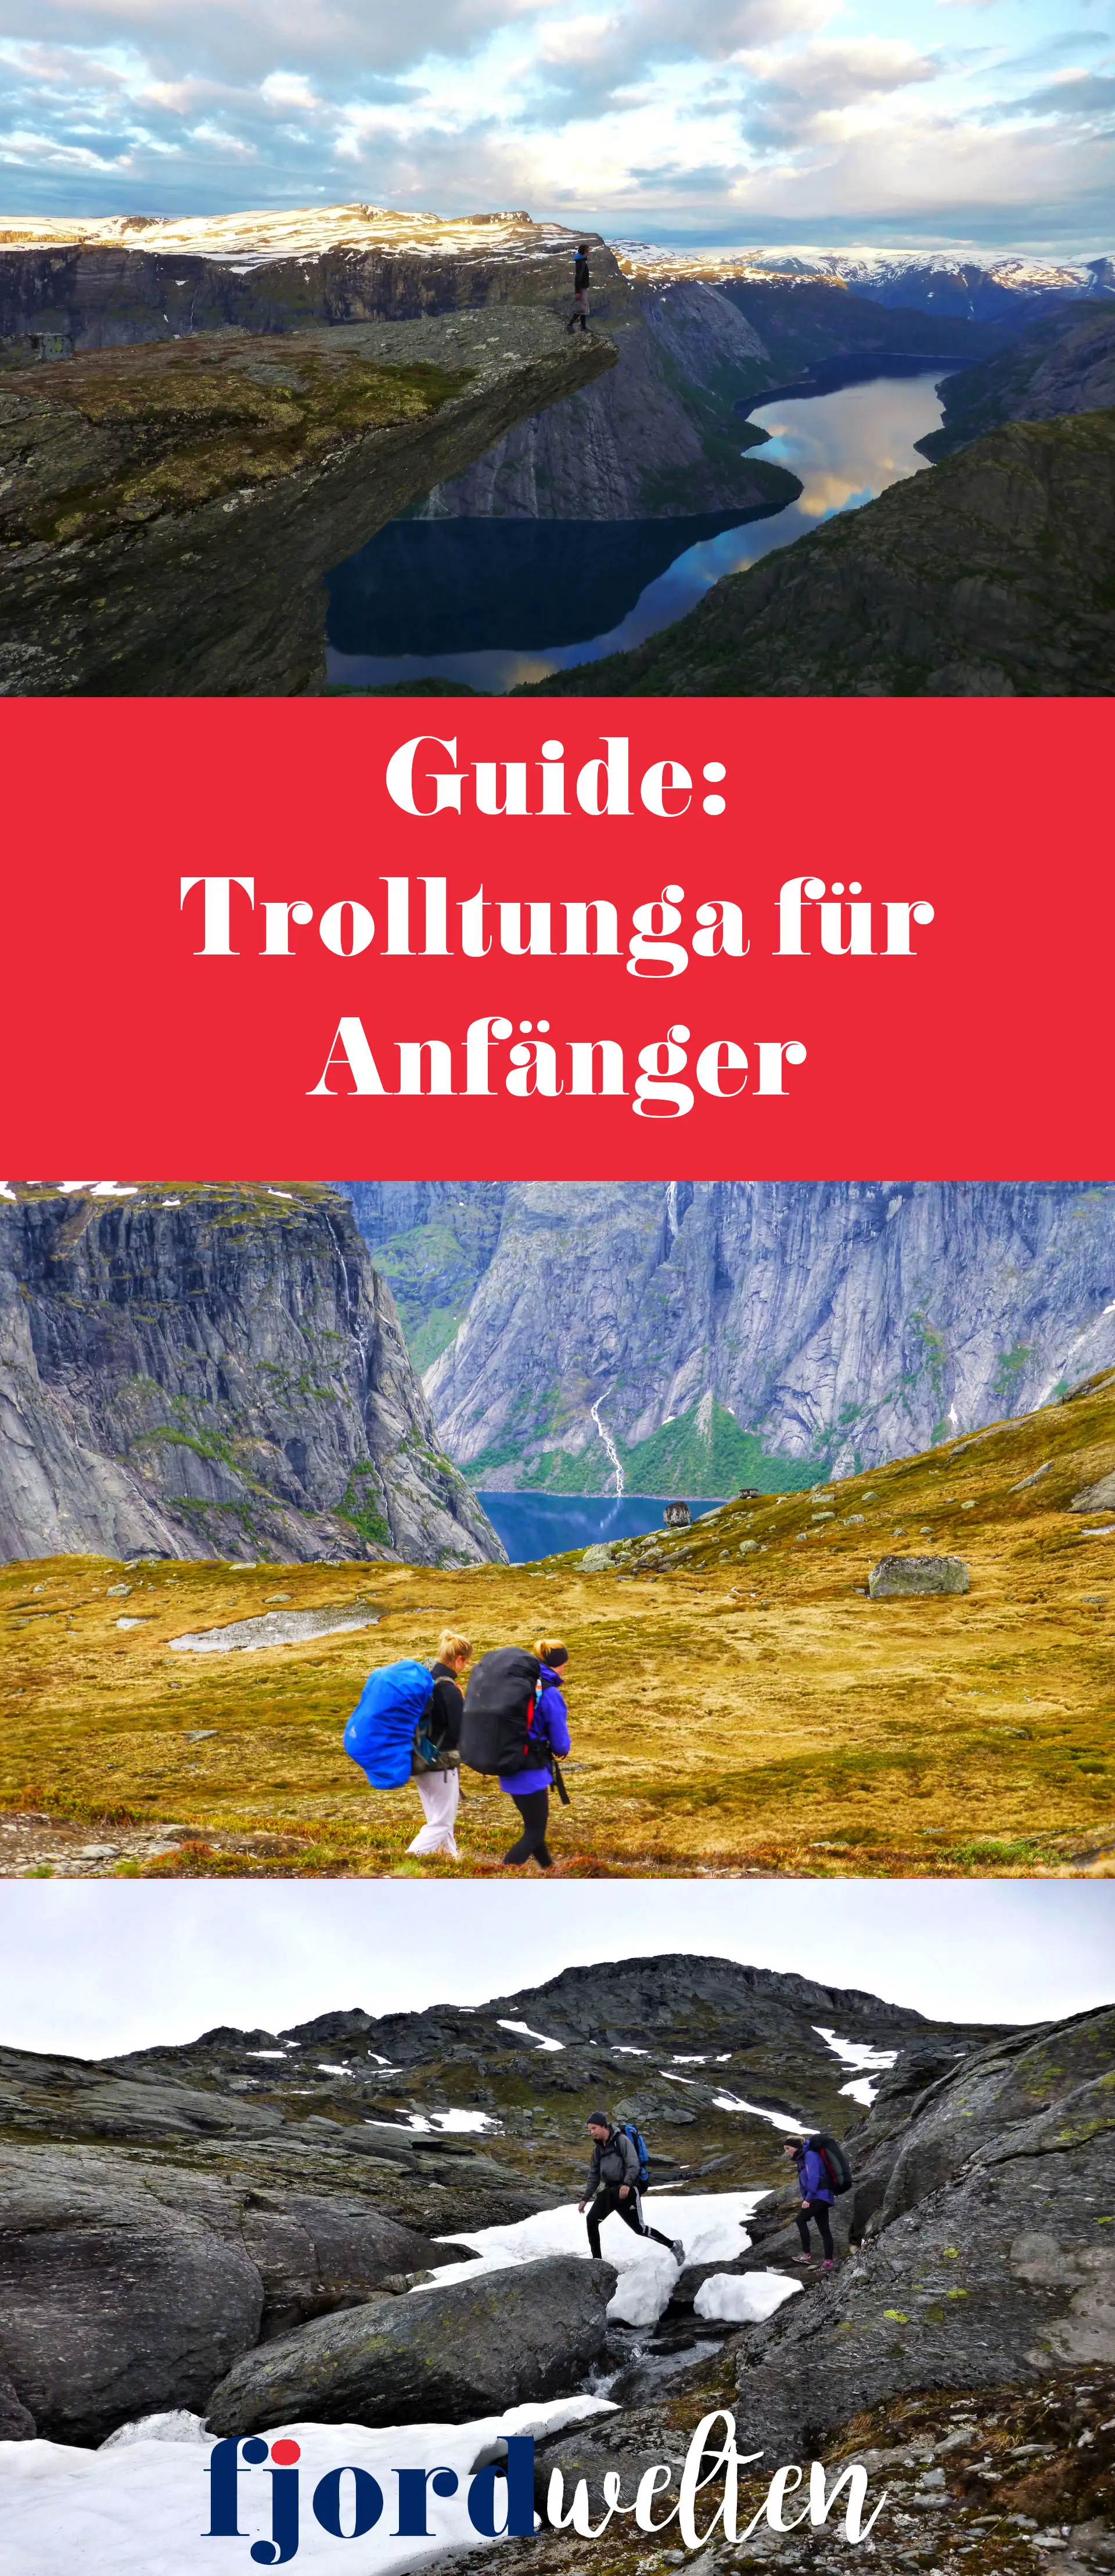 Guide Trolltunga für Anfänger